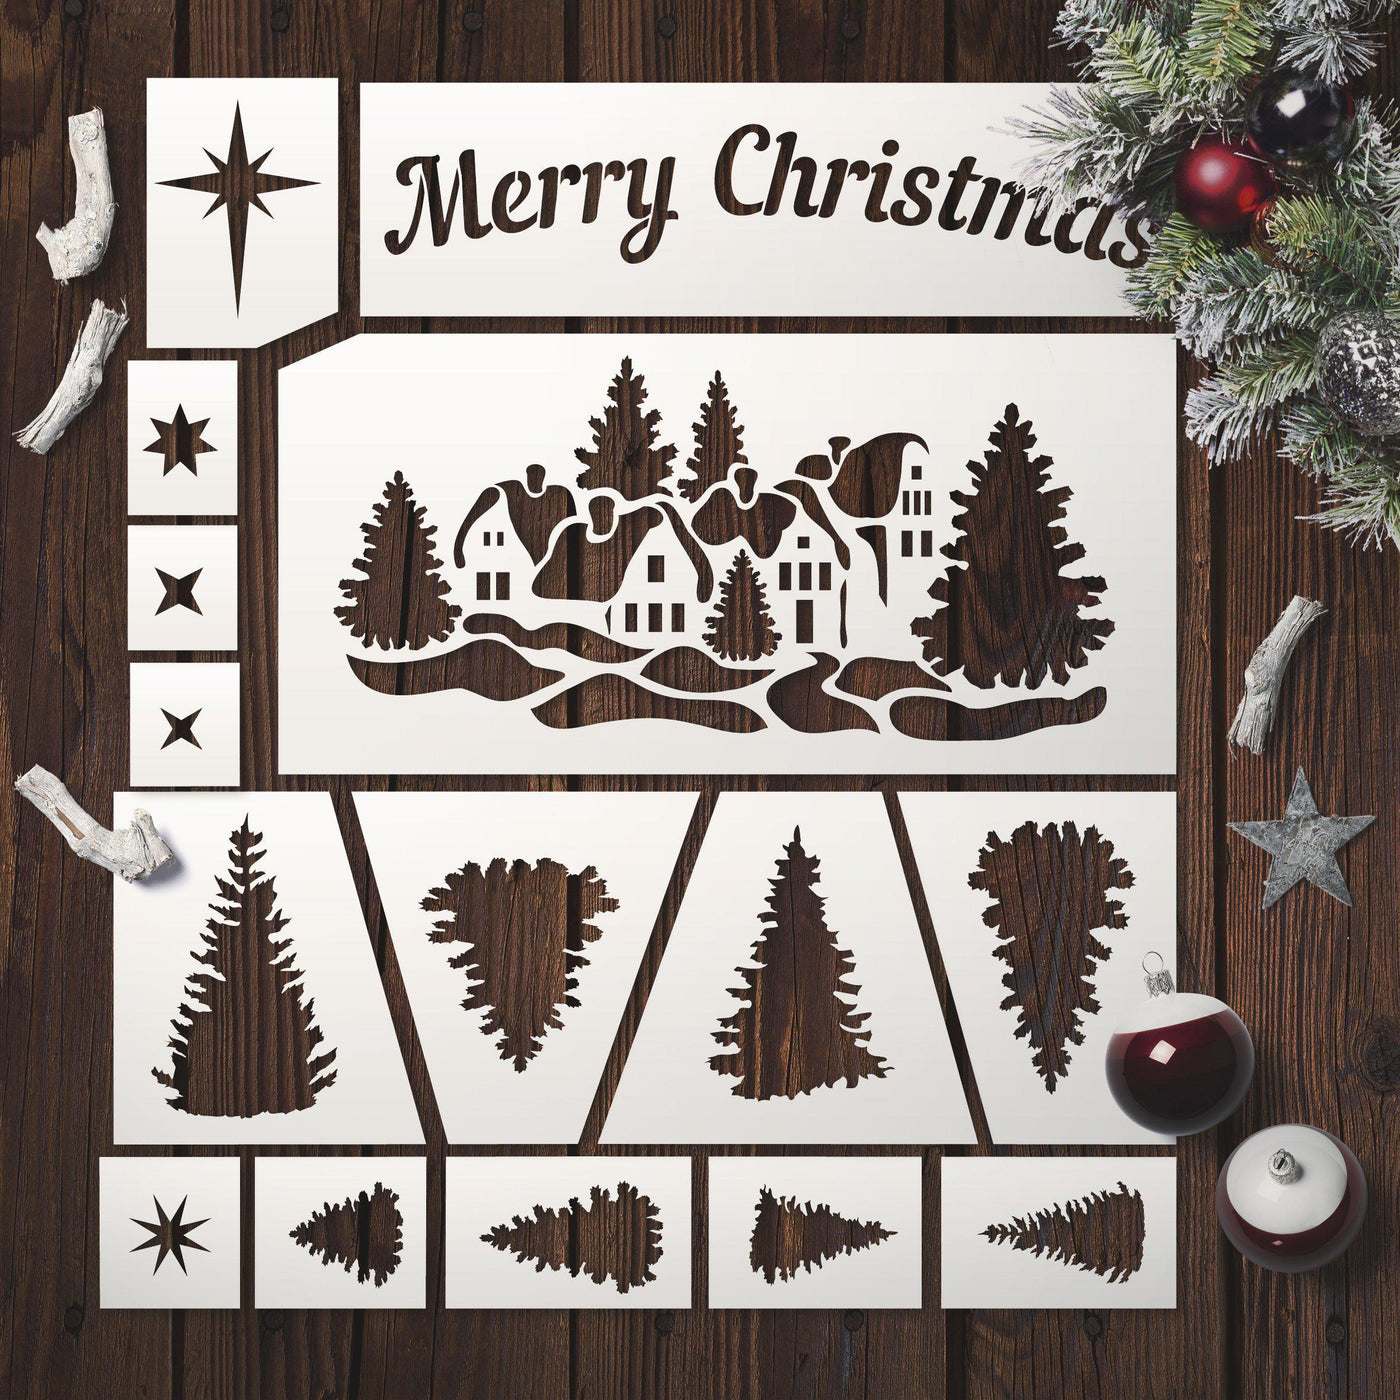 Merry Christmas Sign - Stencils Kit for Windows Decor - Christmas